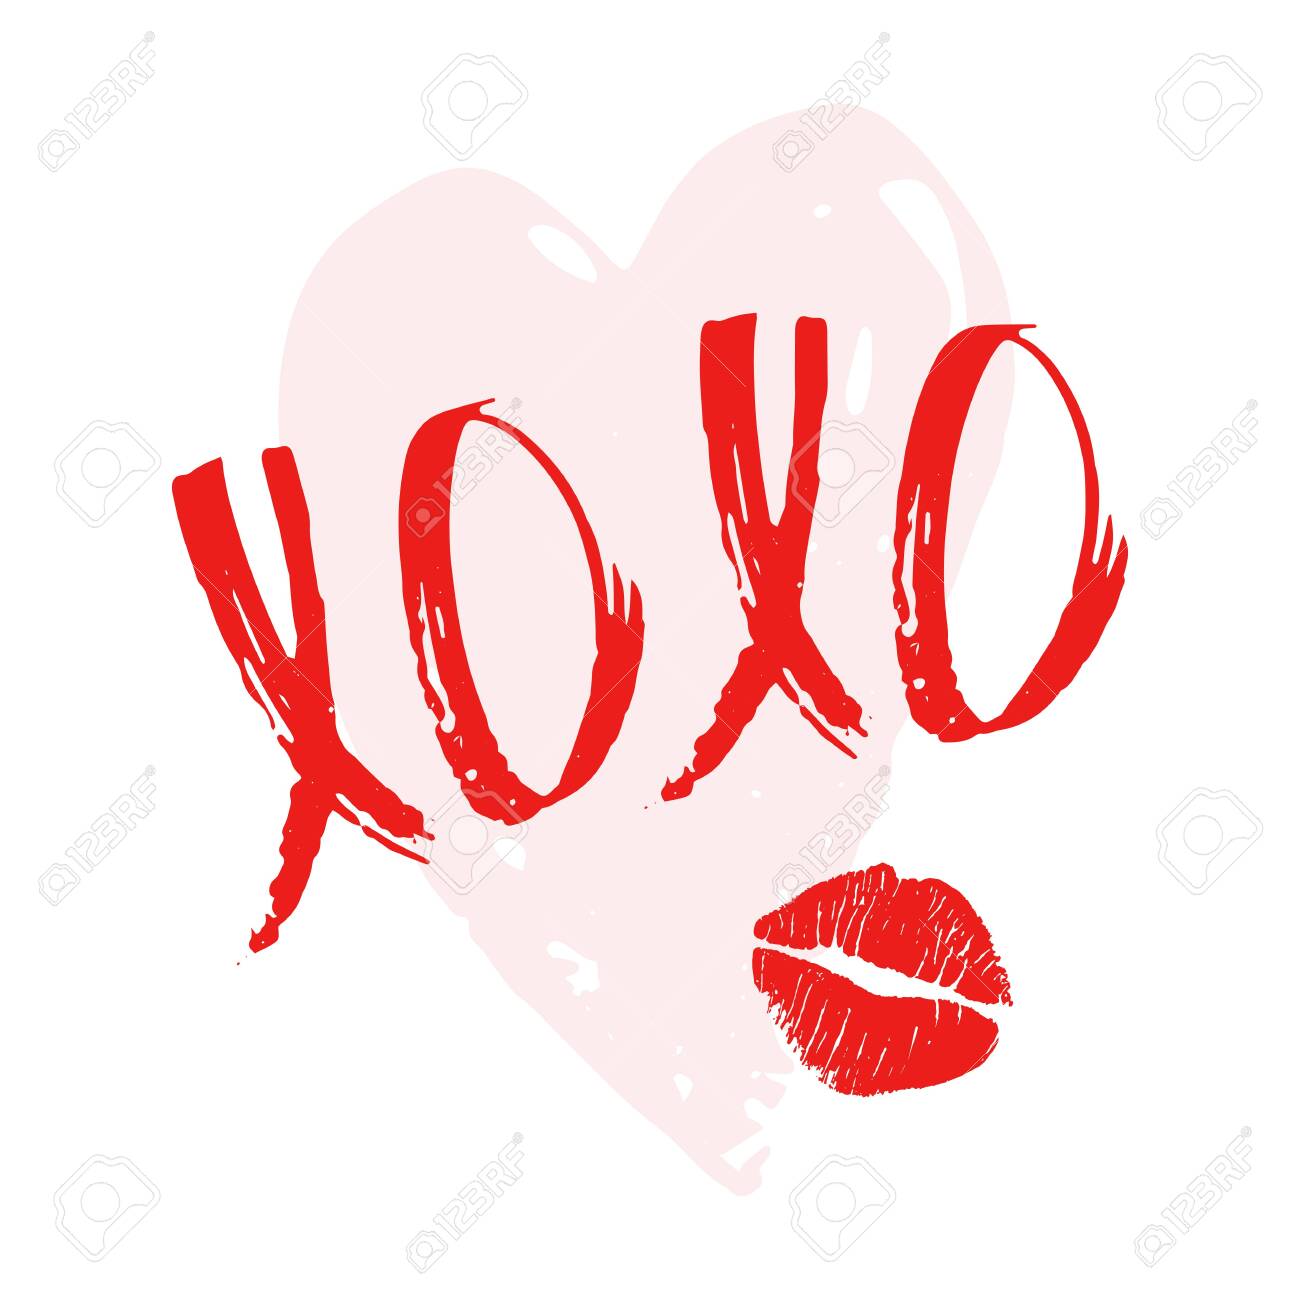 Xoxo Phrase With Kiss Lip Imprint Pink Heart On White